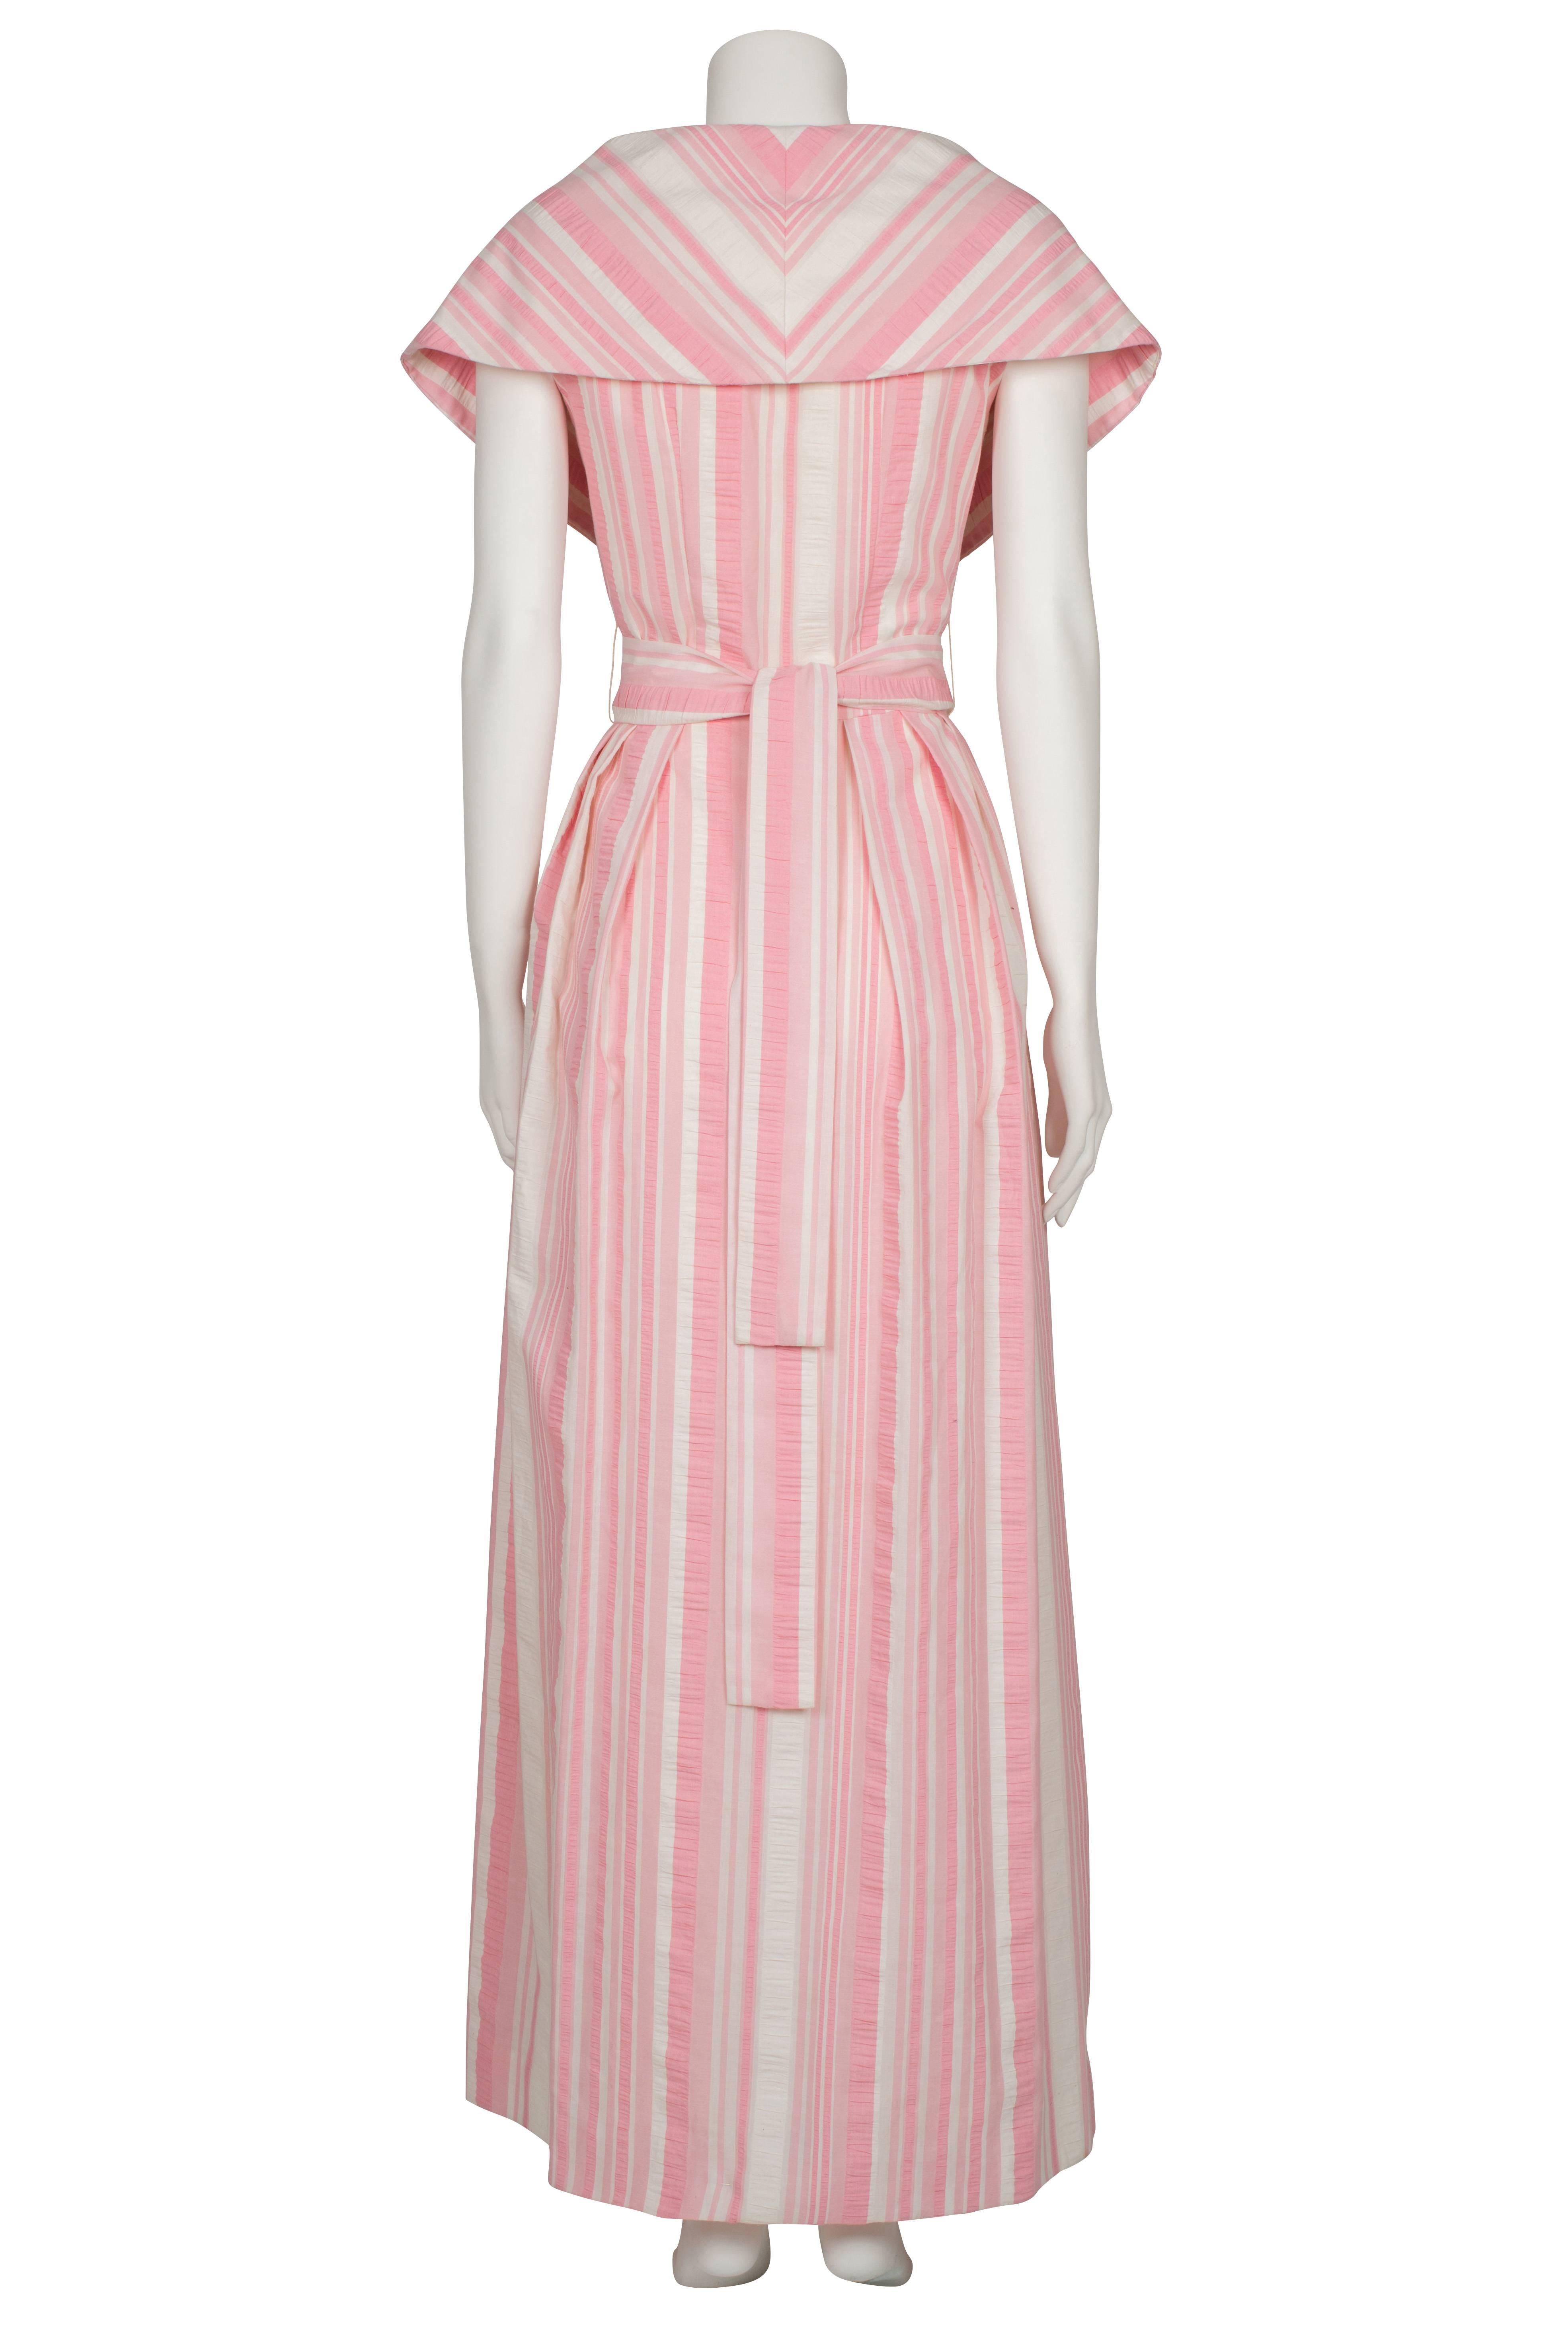 1970s Estevez Seersucker Pink and Ivory Candy Stripe Dress Size S For Sale 1